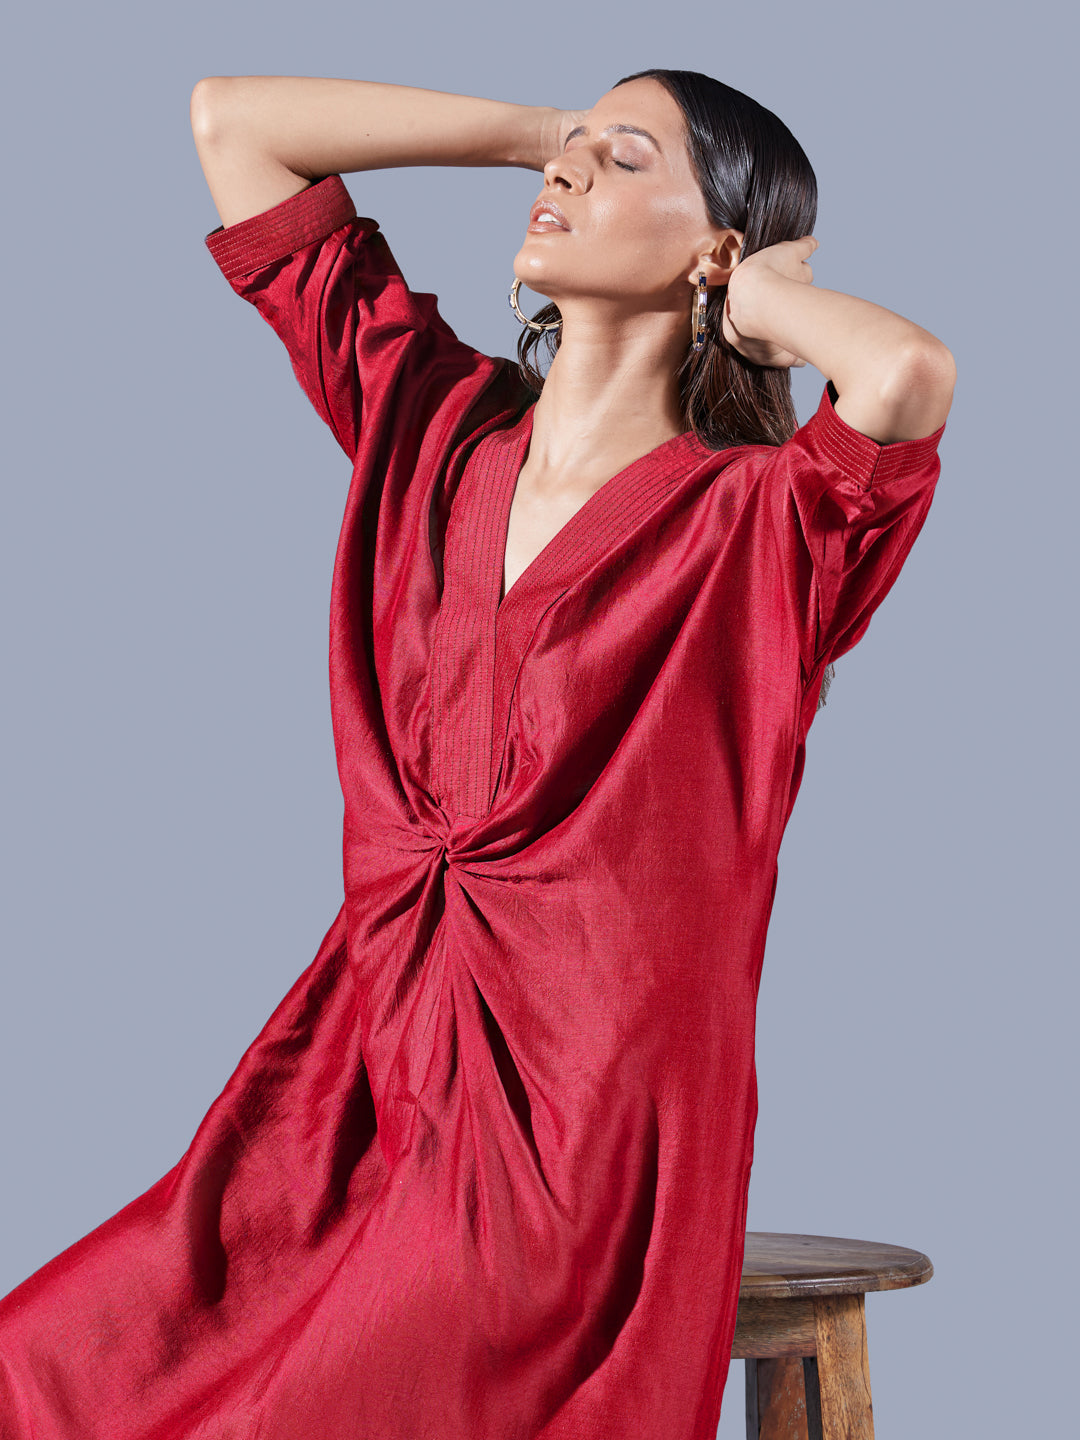 Scarlet Asymmetric Draped Dress - Auruhfy India